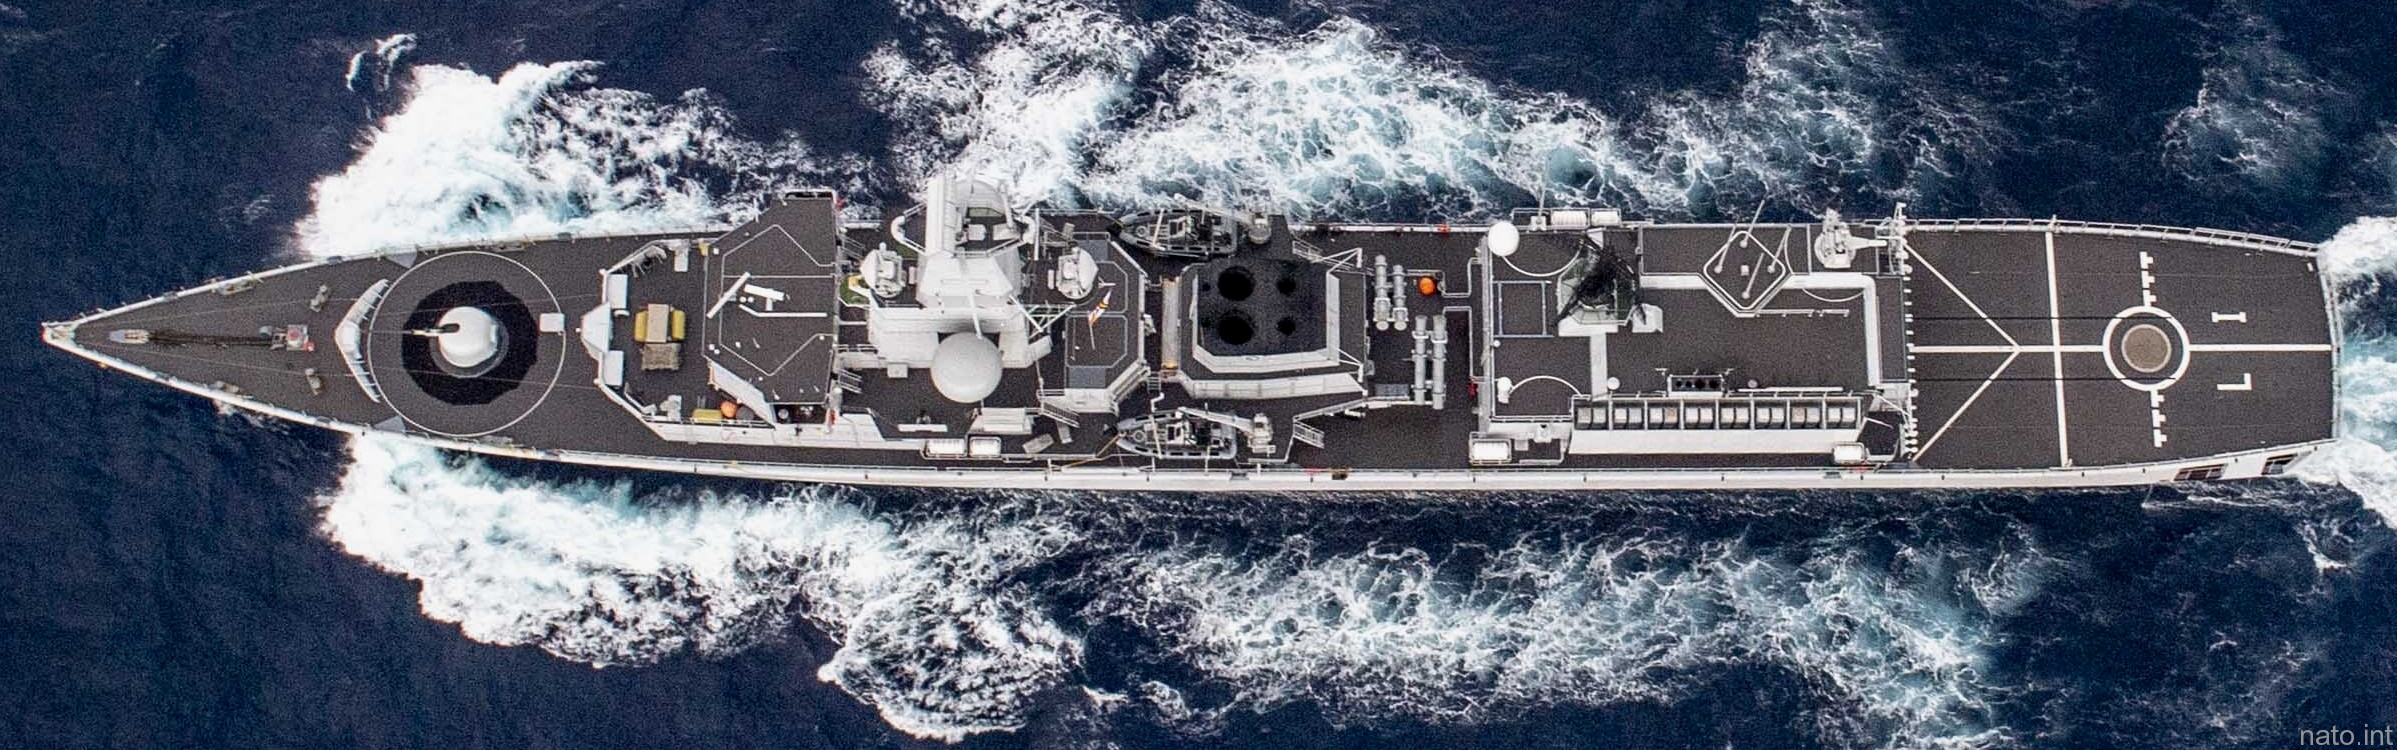 f-930 bns leopold i frigate belgian navy karel doorman class 14